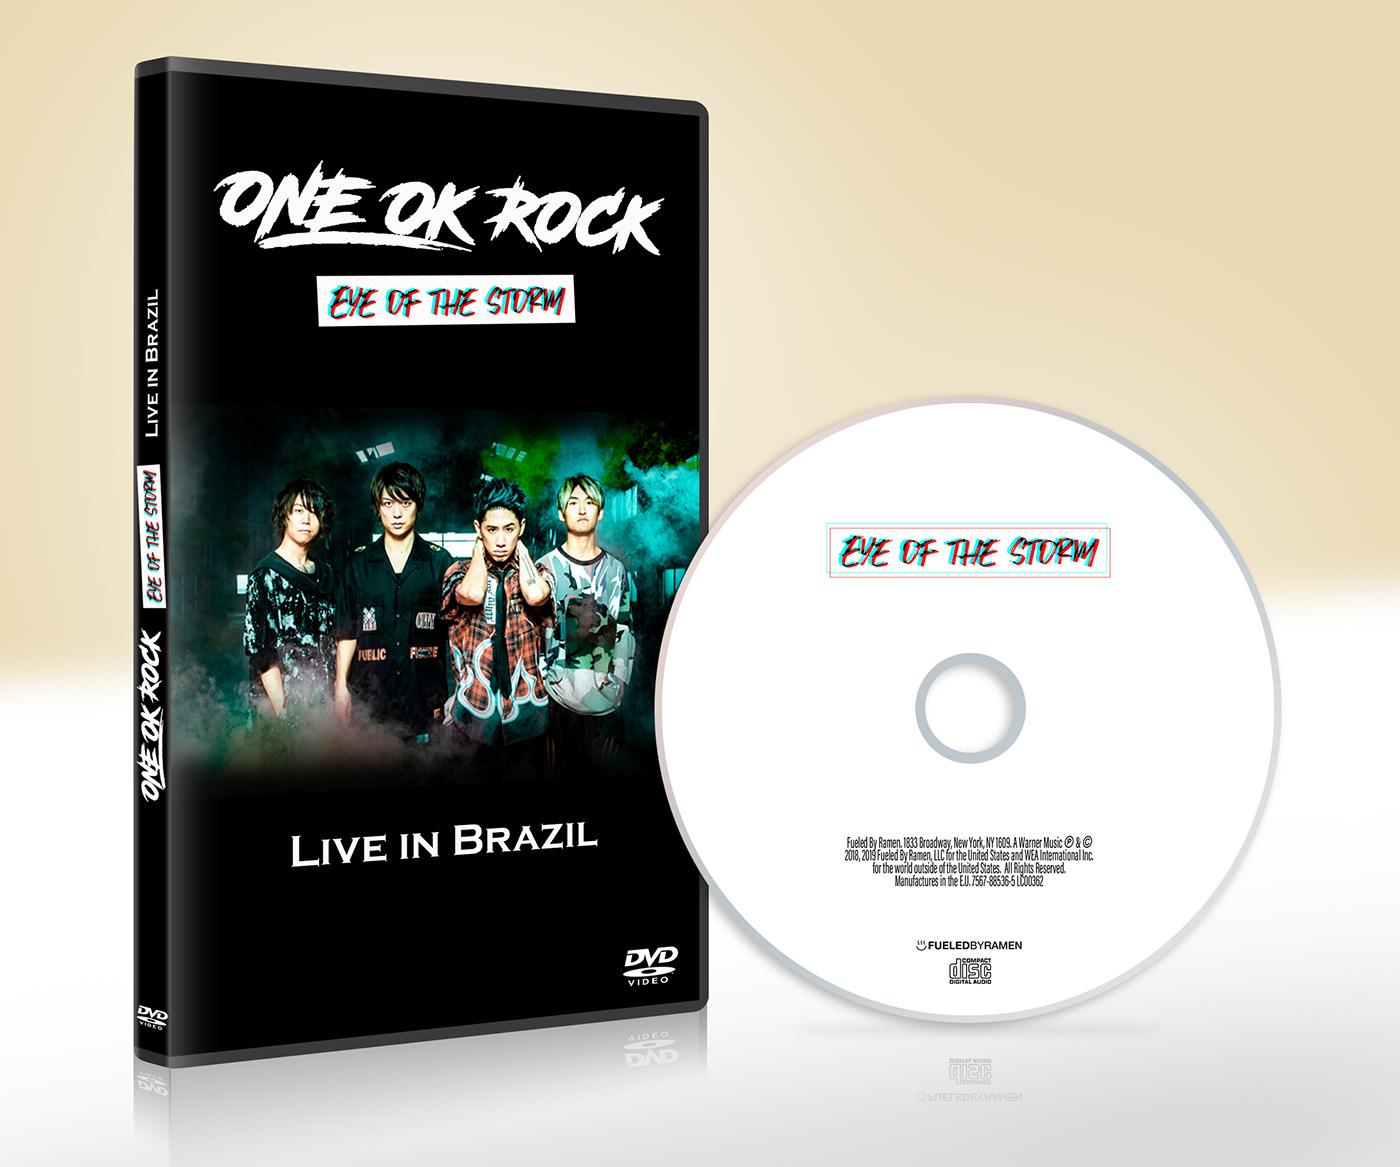 Mockup One Ok Rock cd DVD